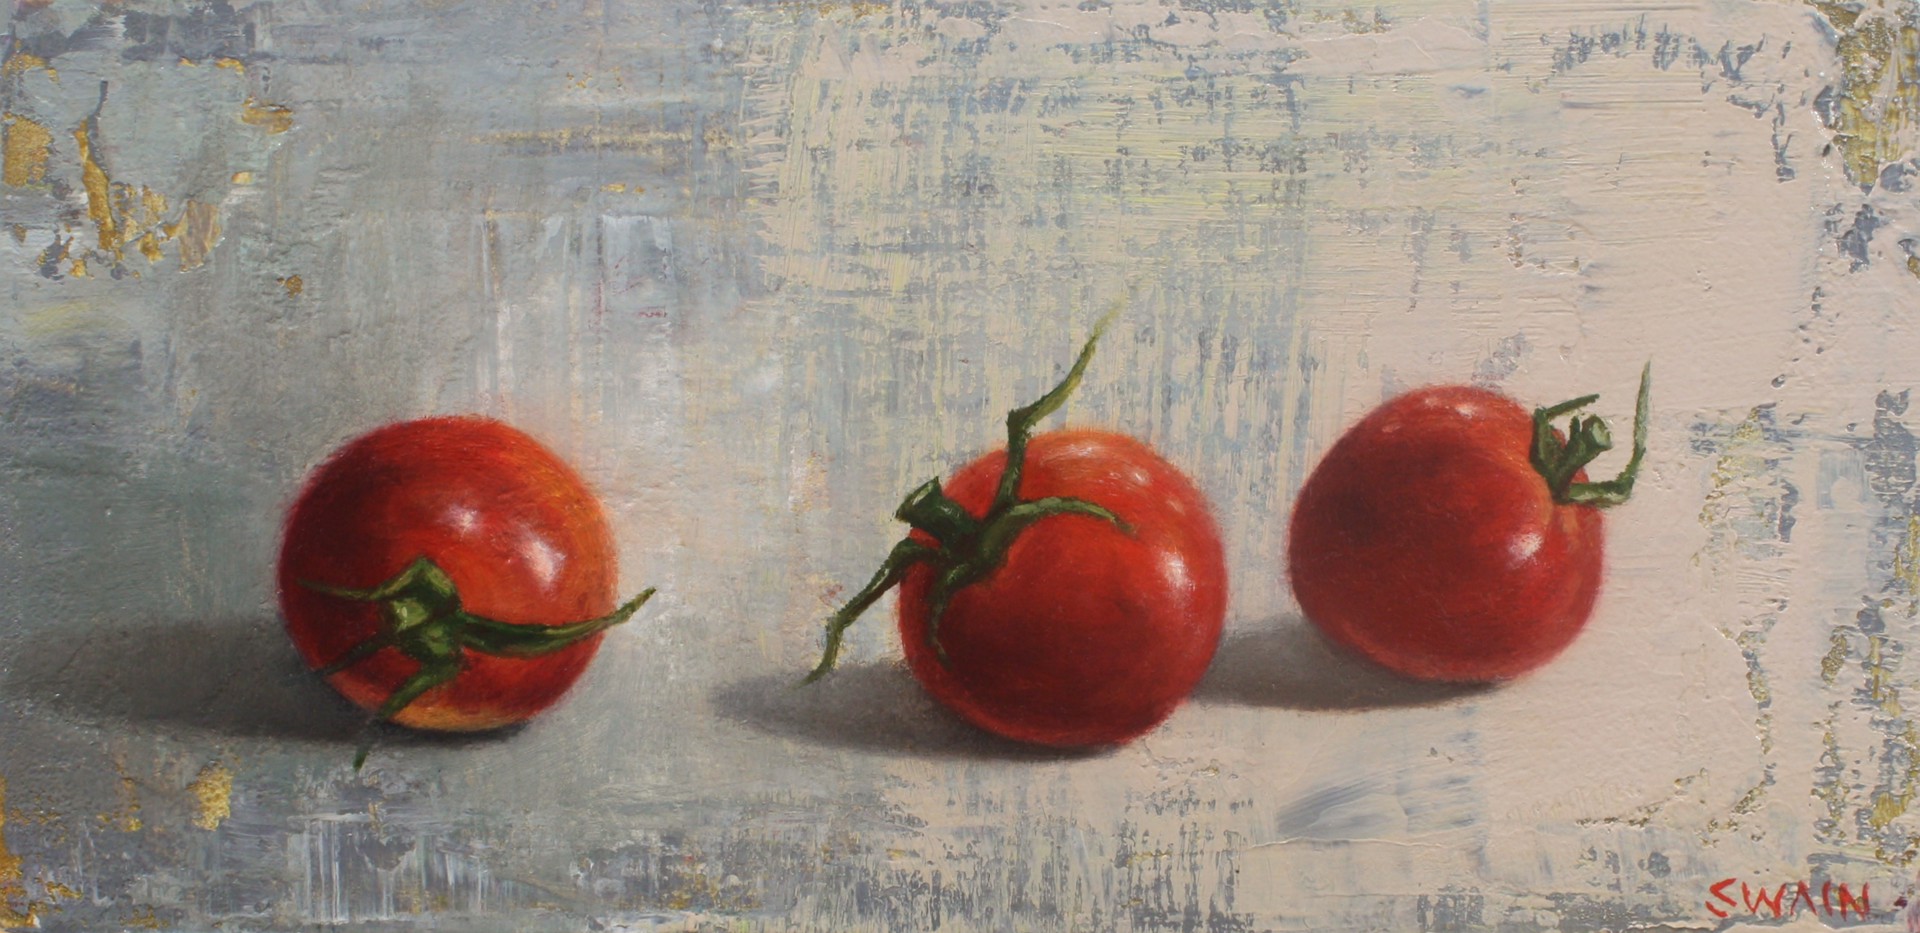 3 Cherry Tomatoes by Tyler Swain